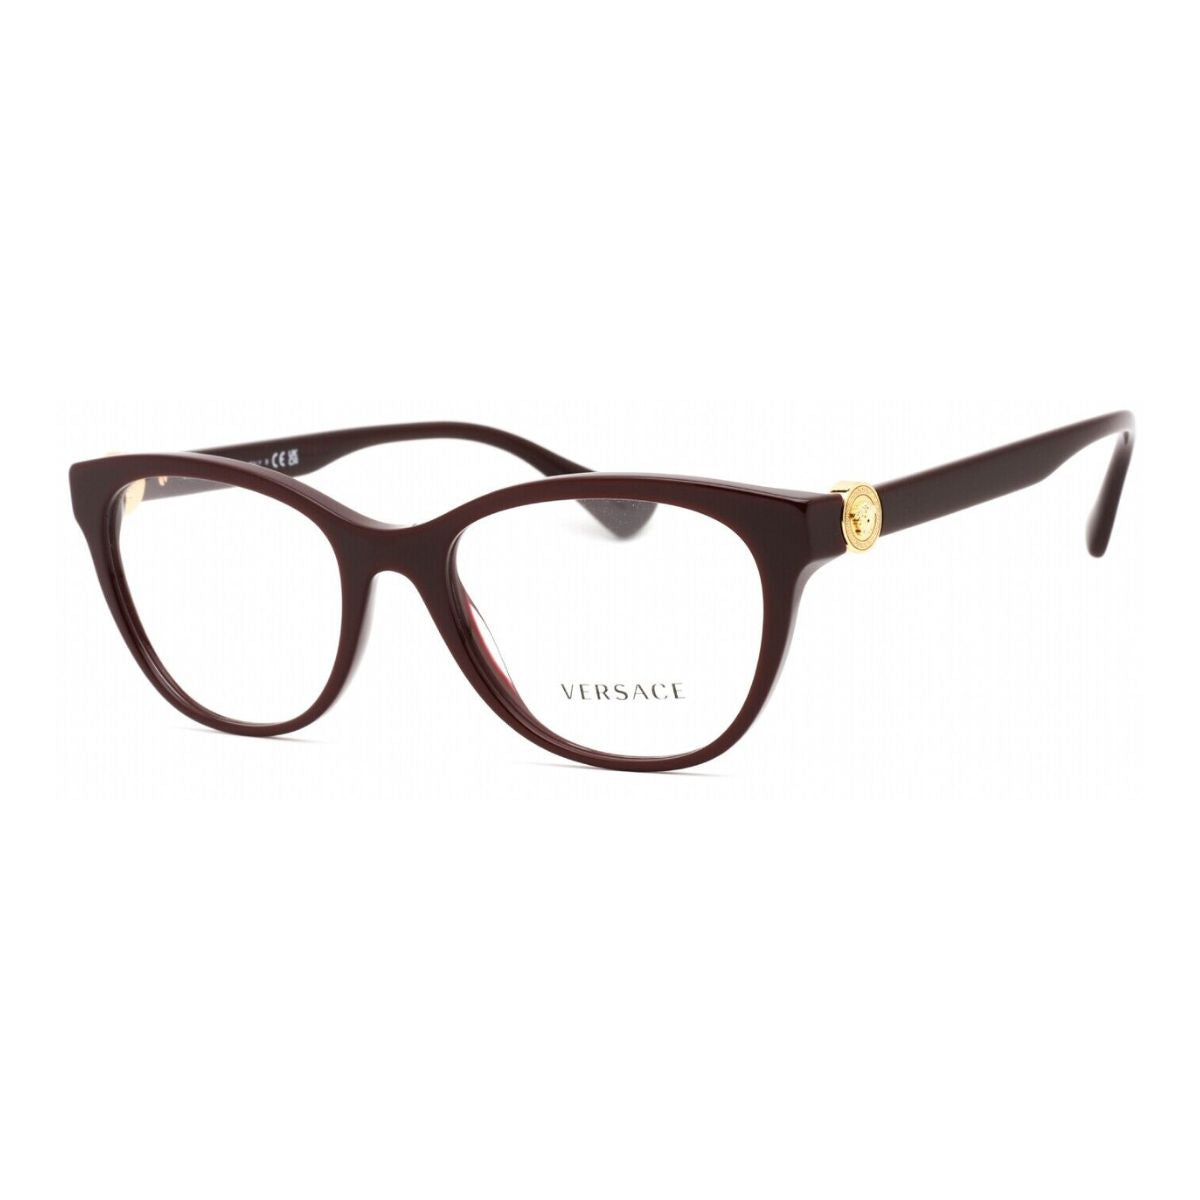 "Versace 3330 5386 Prescription Eyeglases Frame For Women's At Optorium"